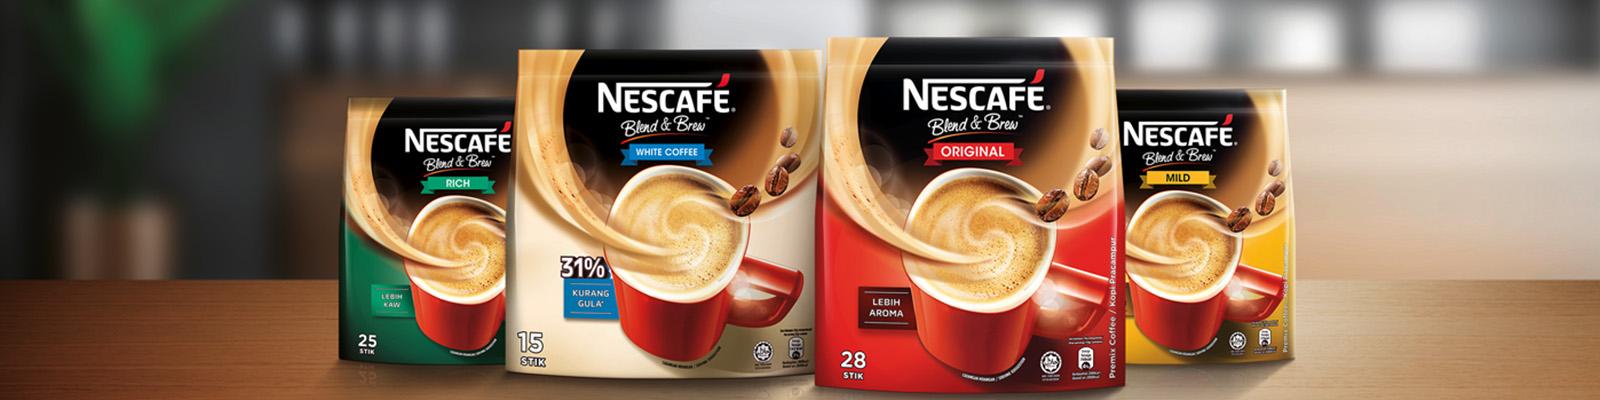 Nescafe mixes banner